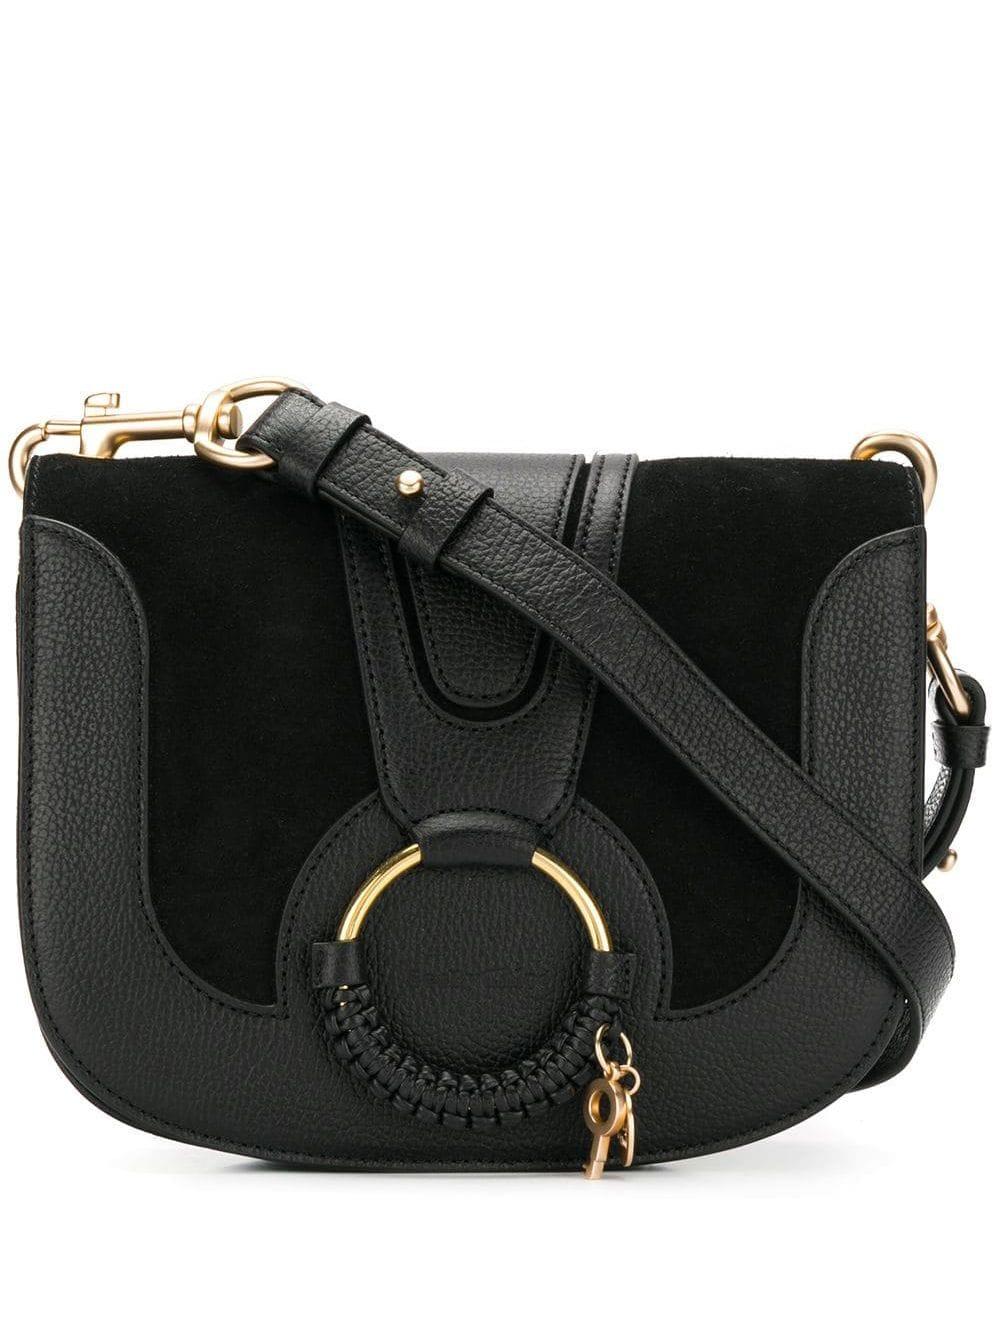 See By Chloé Leather Hana Medium Saddle Bag in Black - Lyst